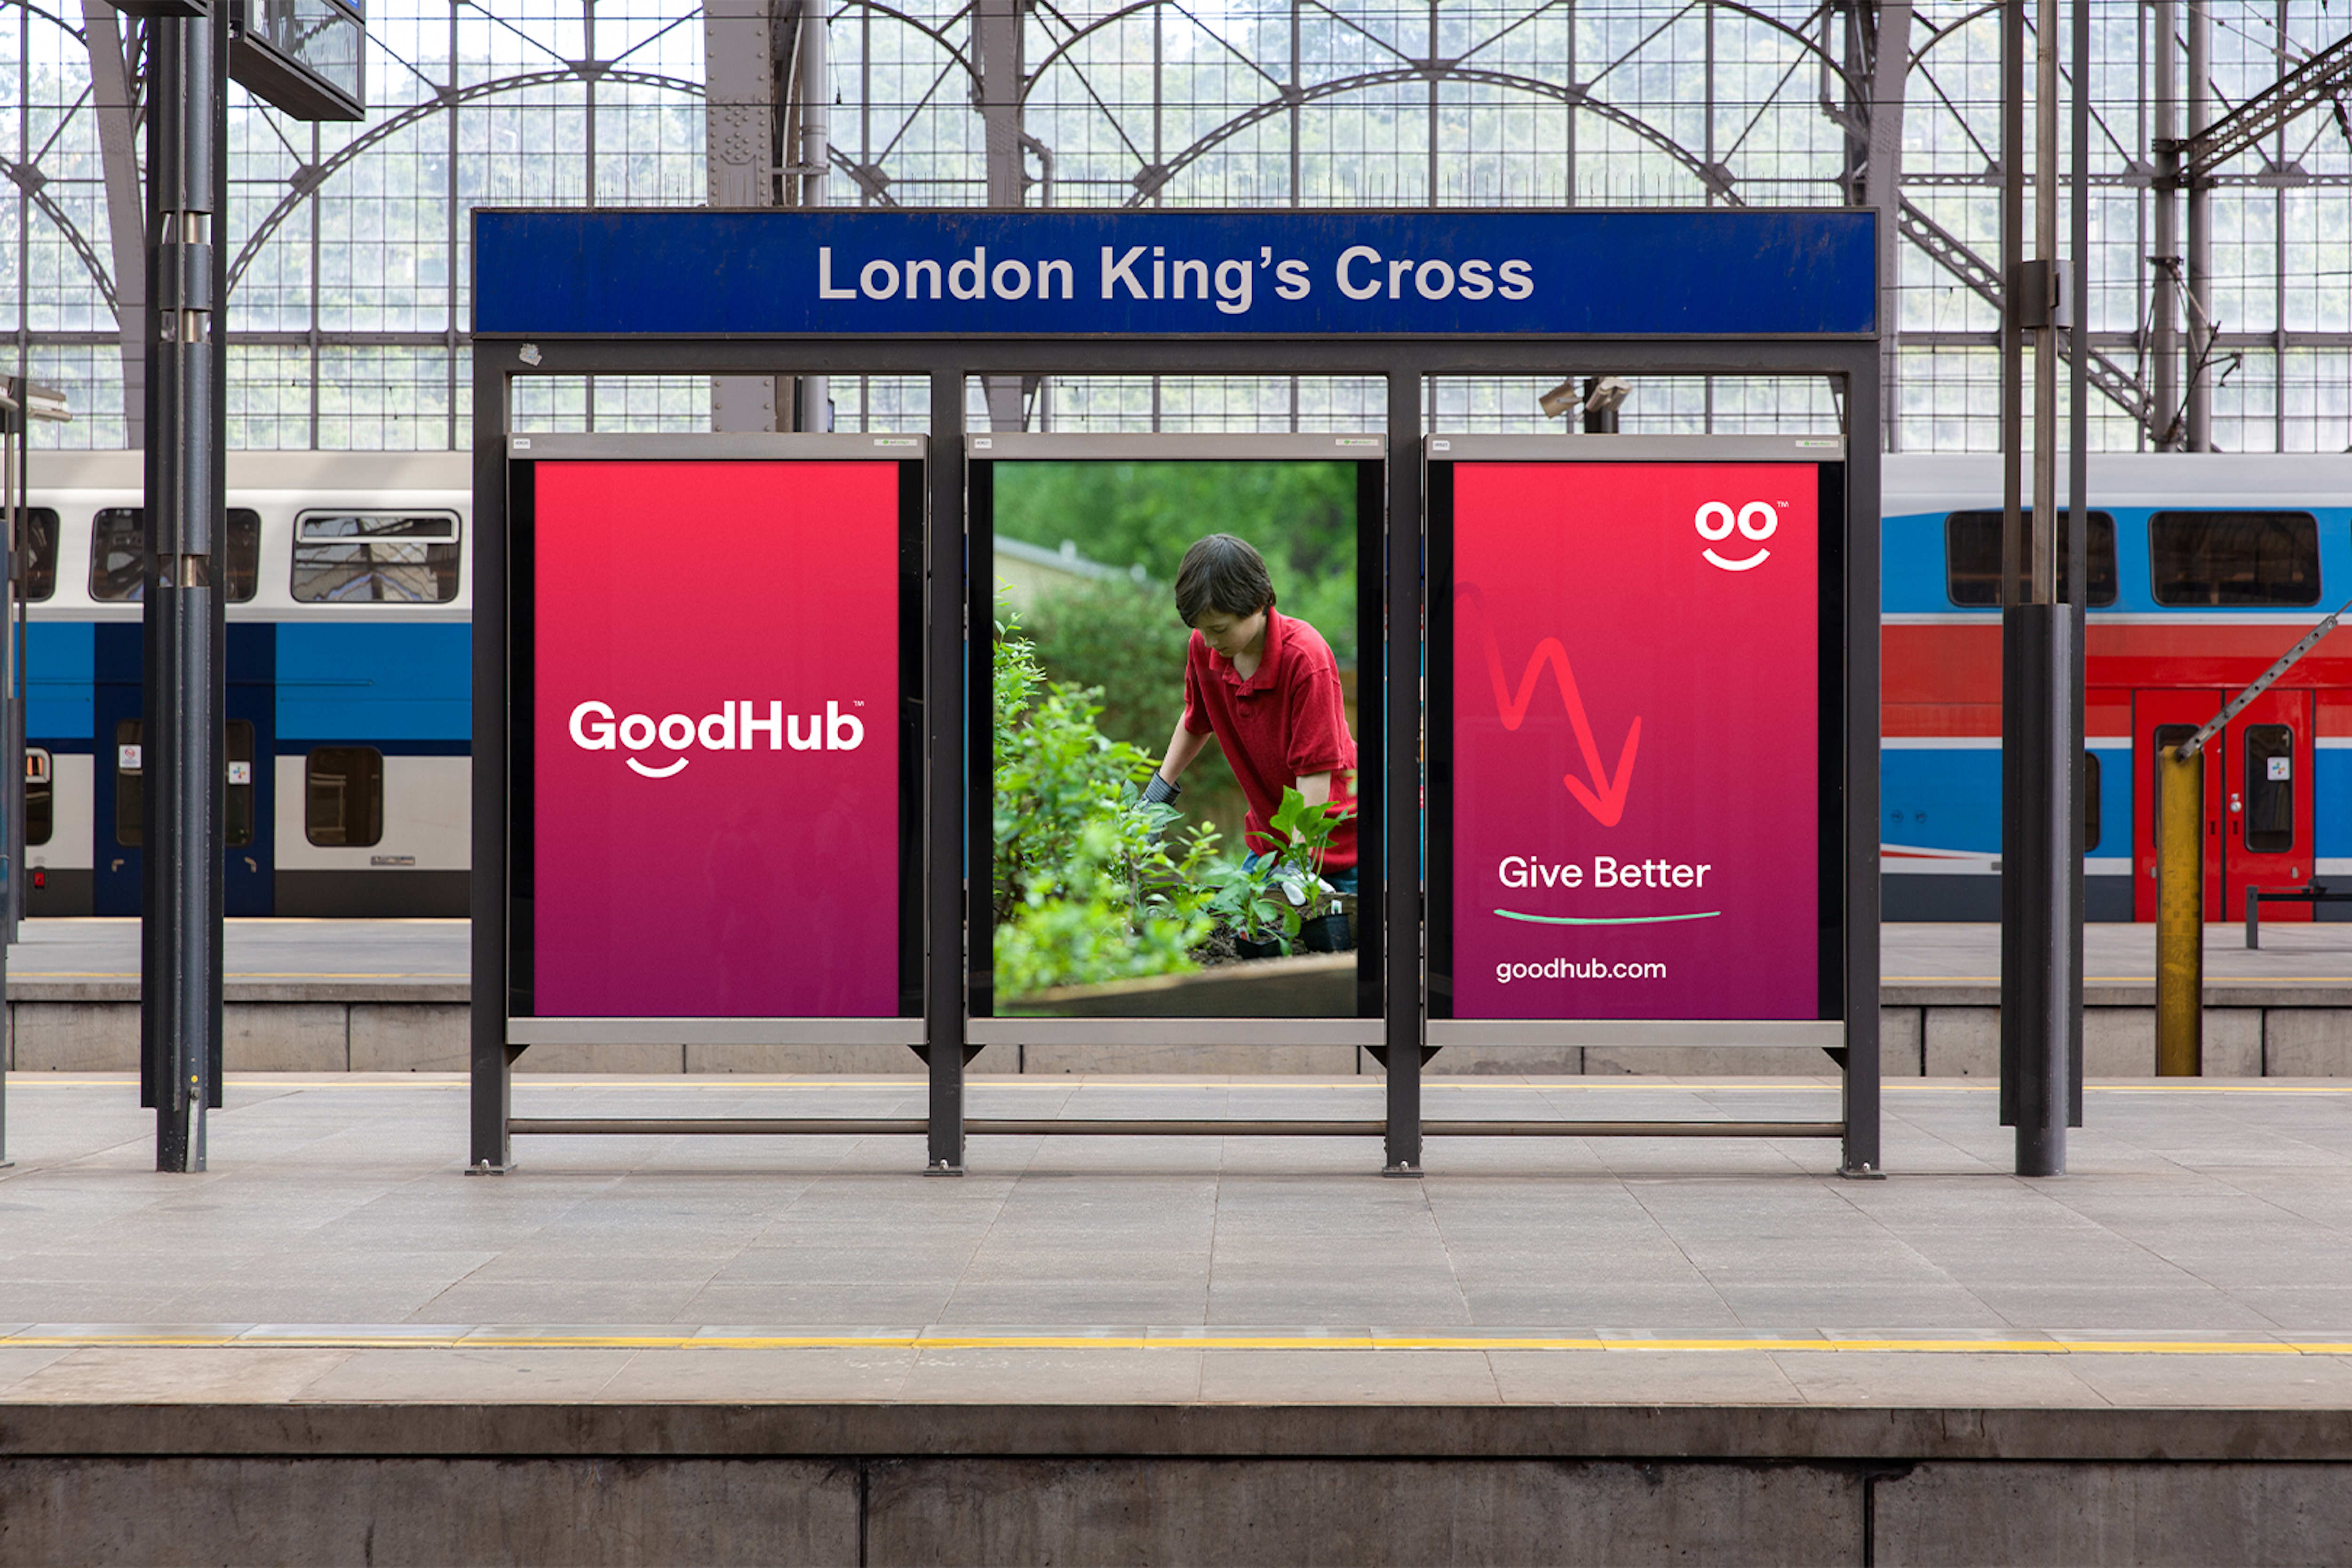 GoodHub train poster advertisement